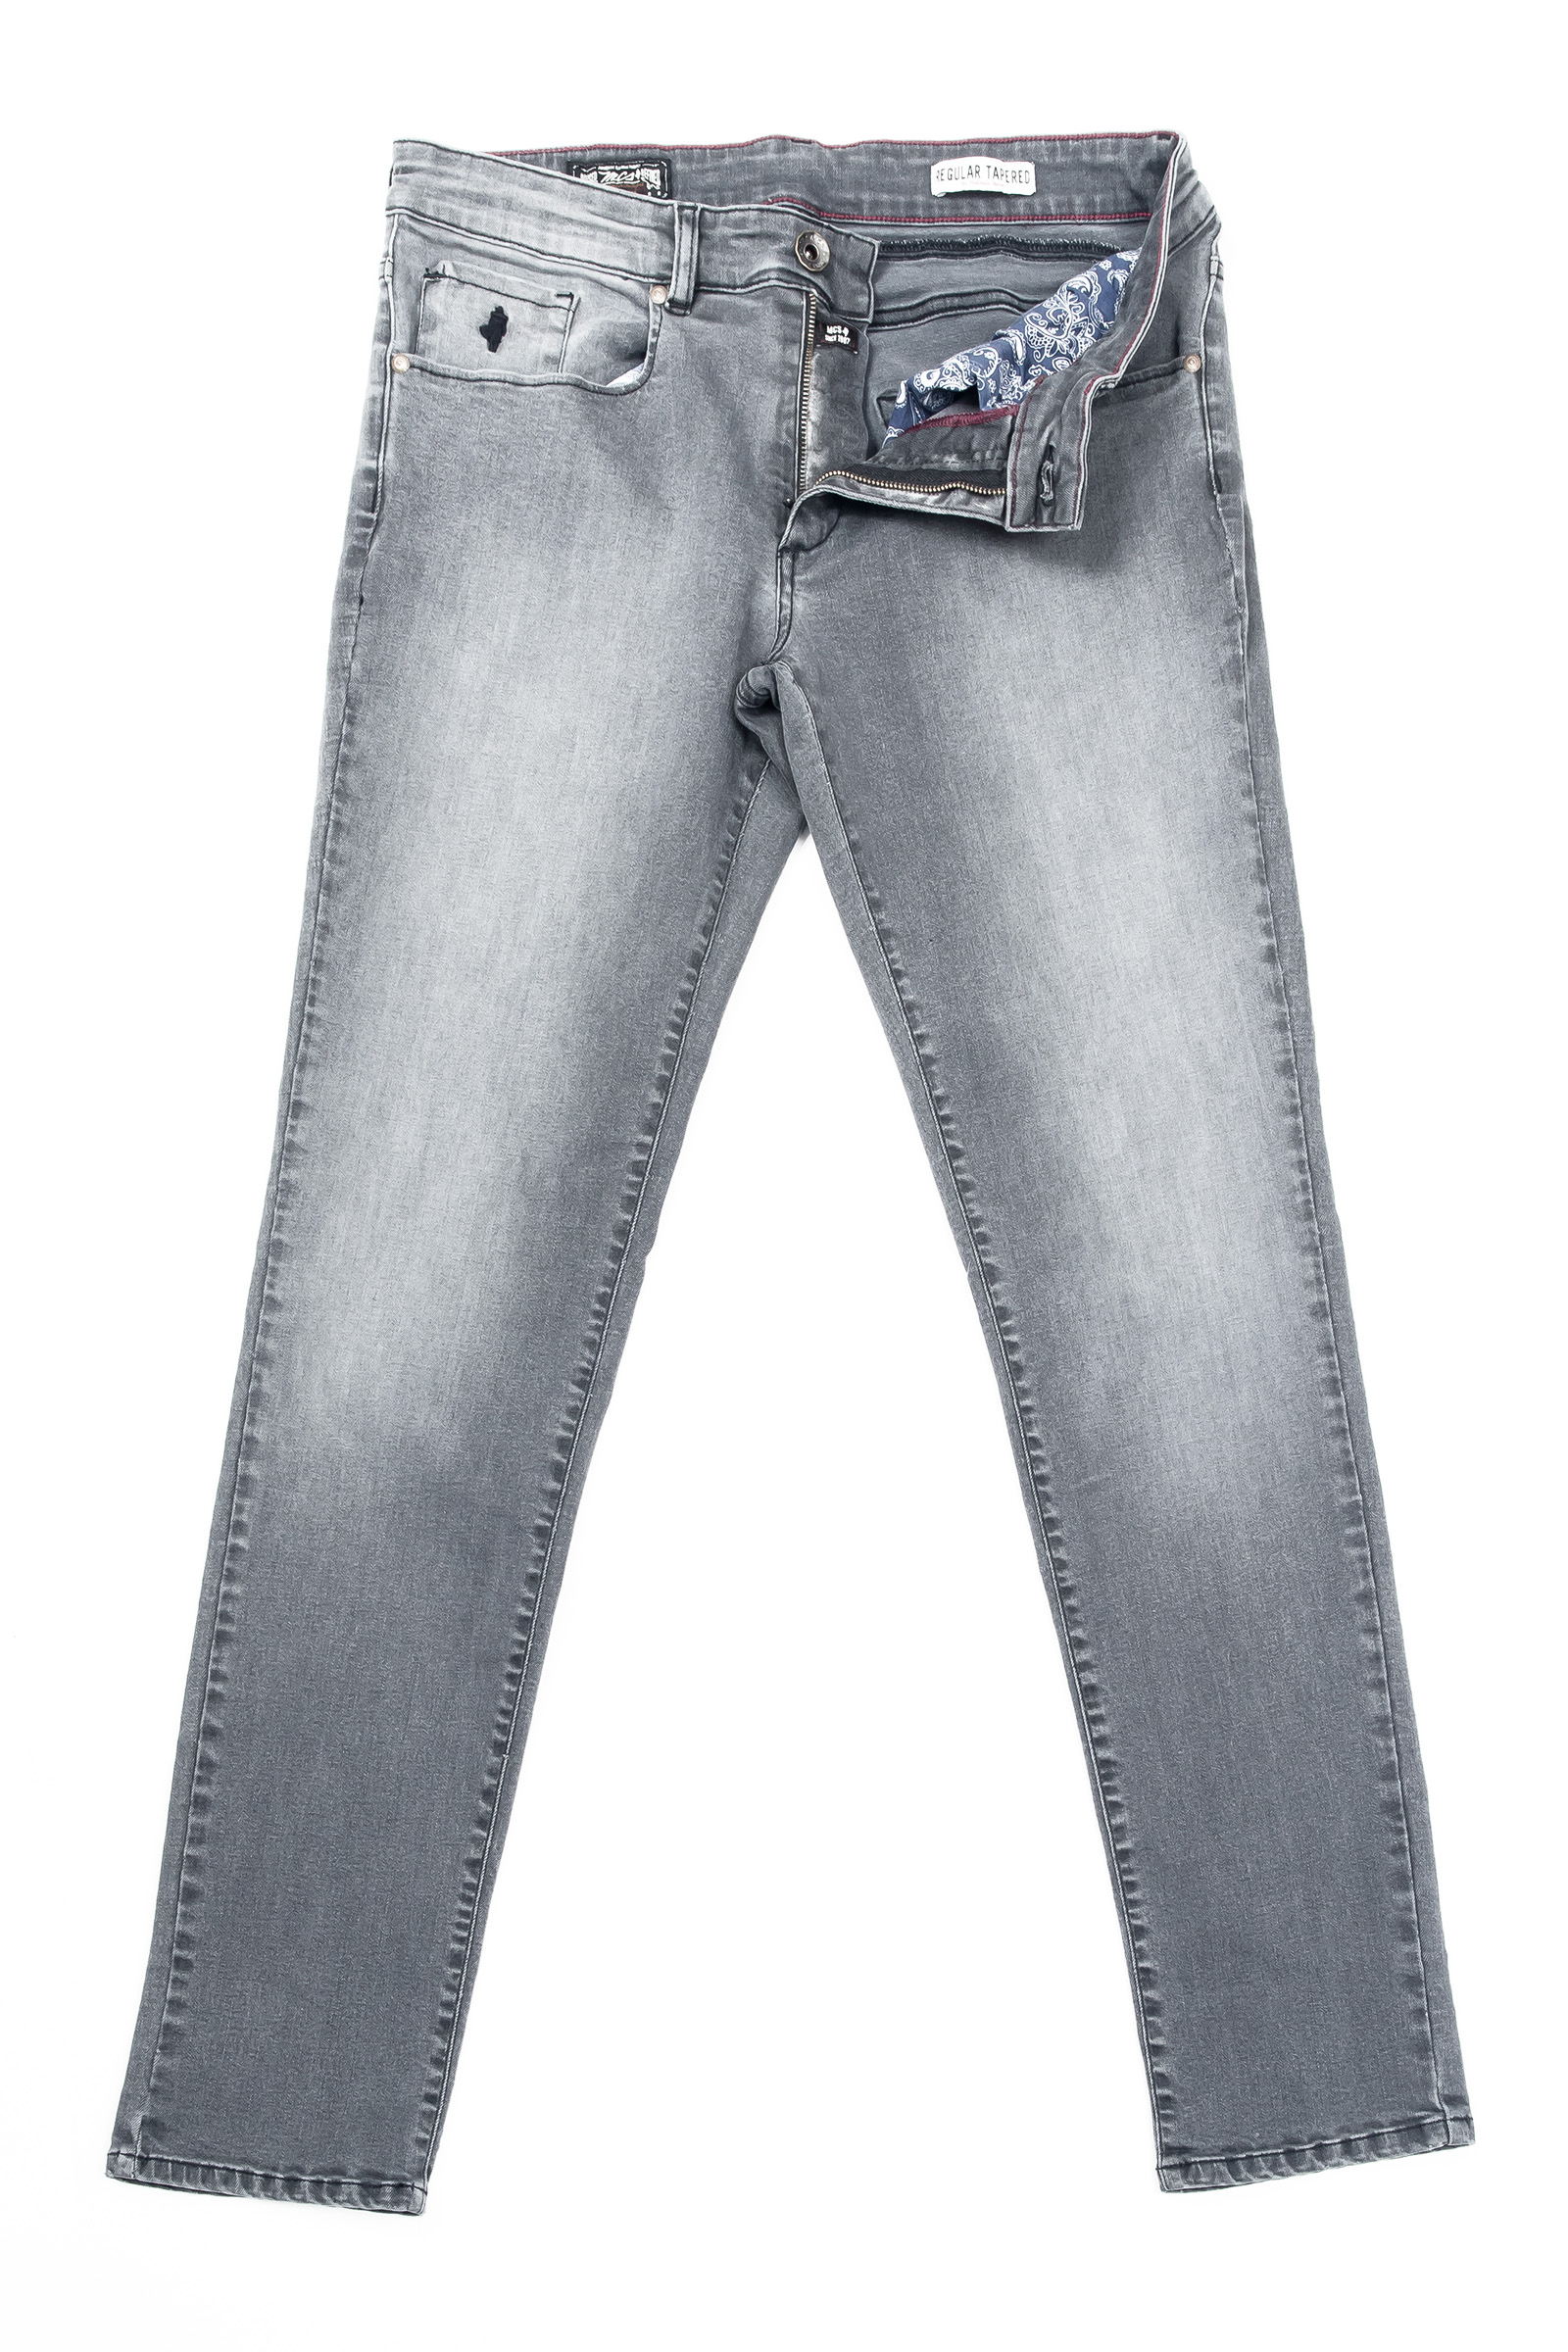 jeans mcs regular tapered